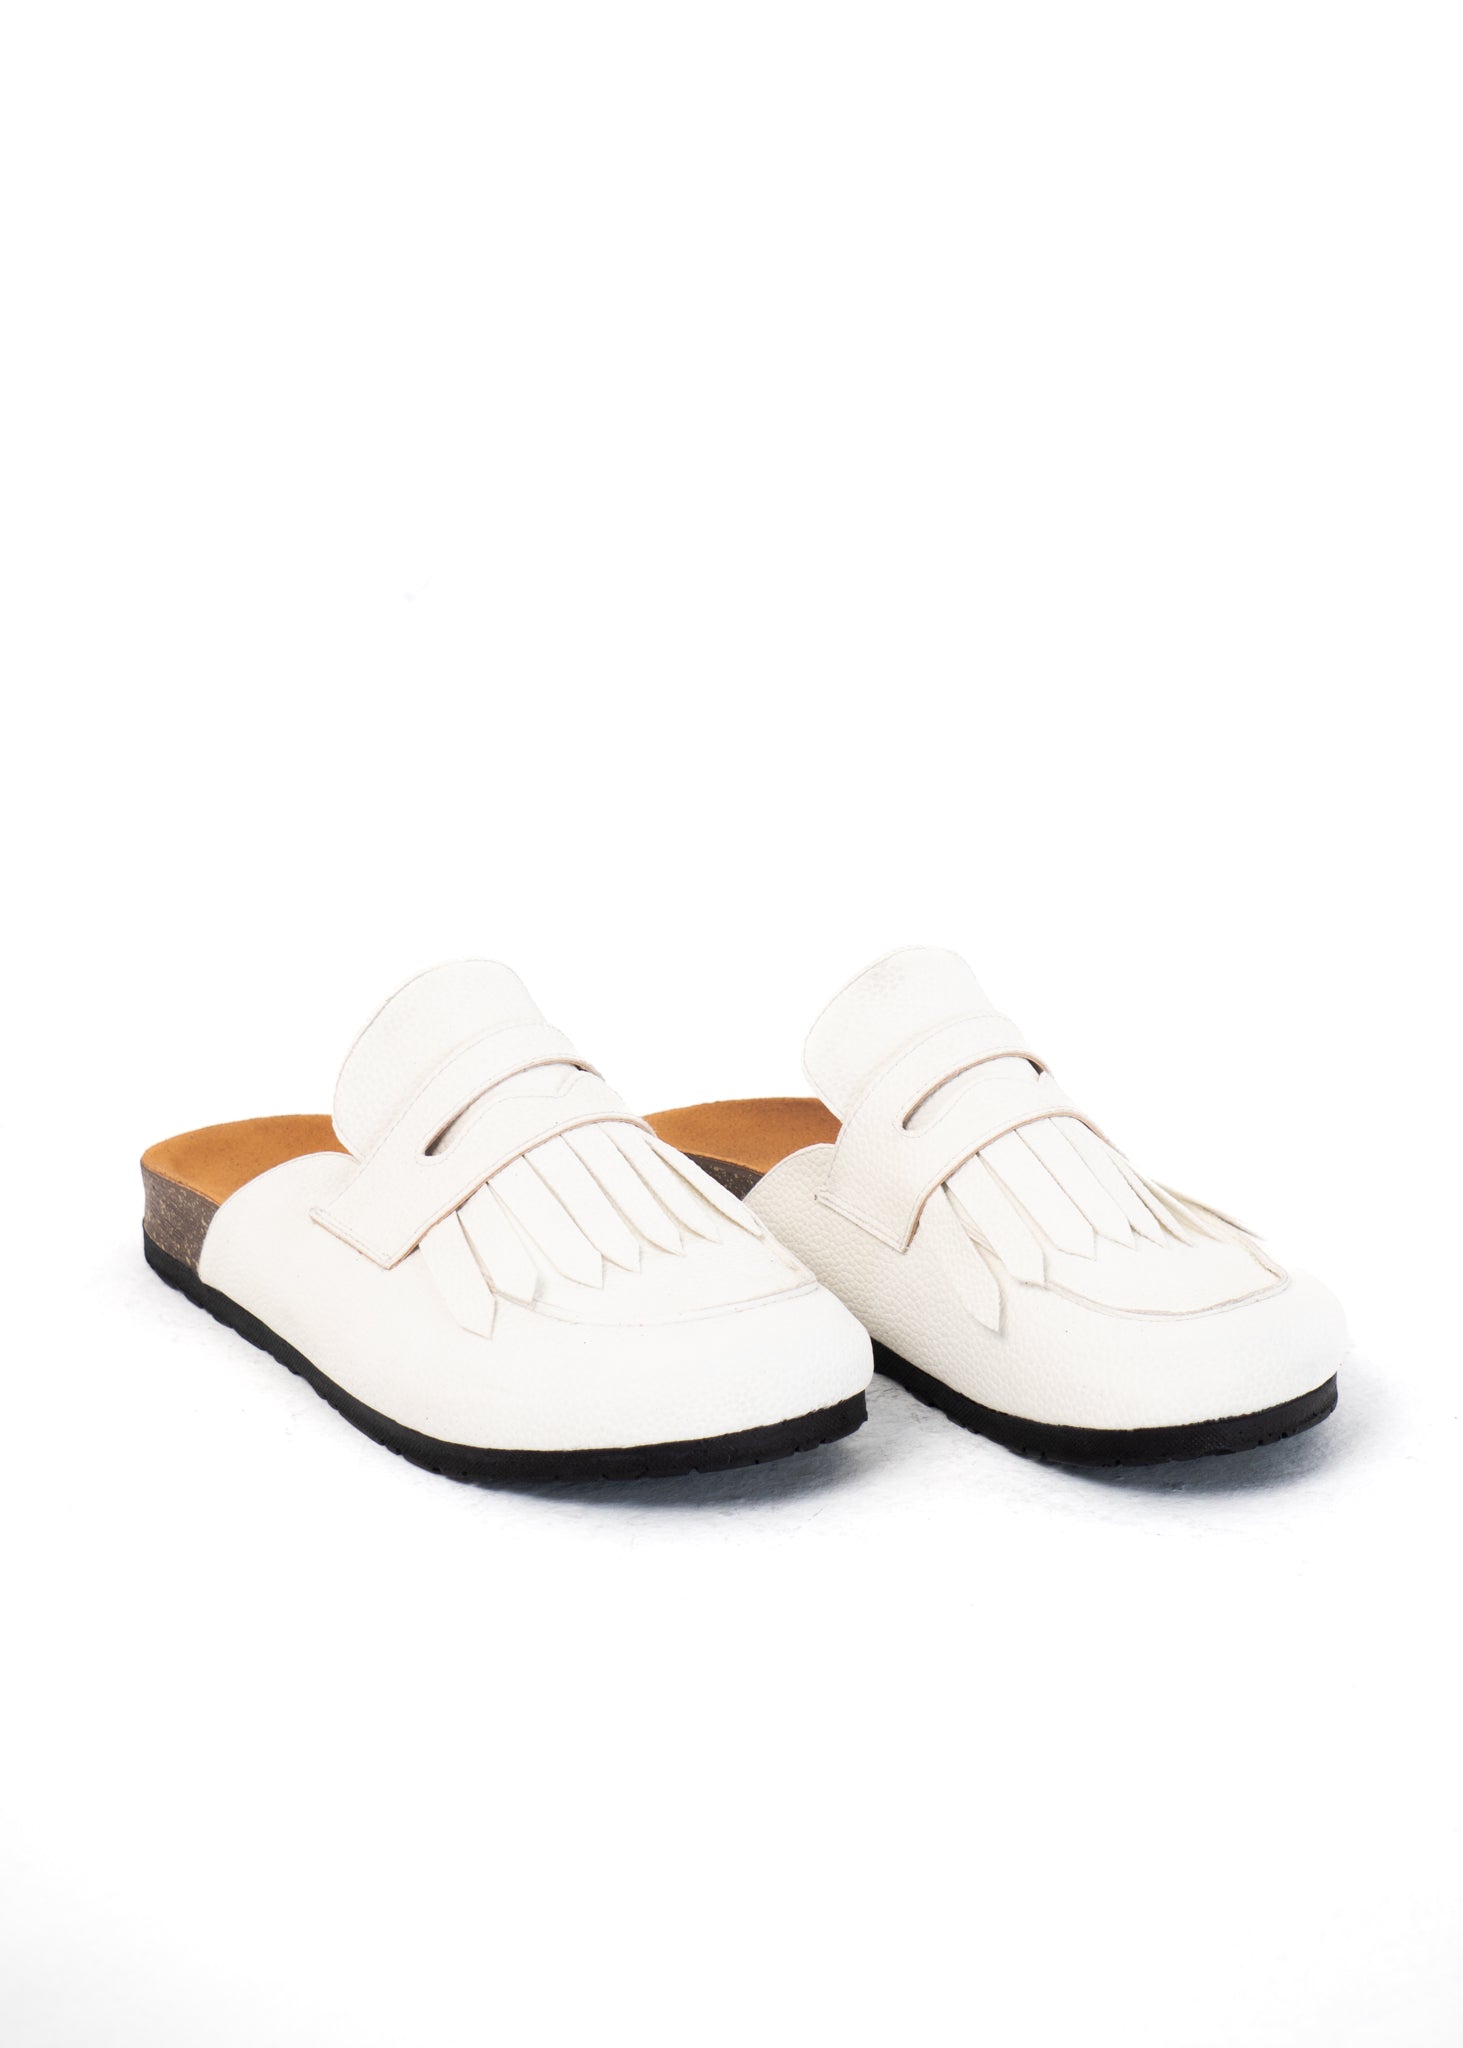 Loafer Clogs " Fringed " - Radiant White